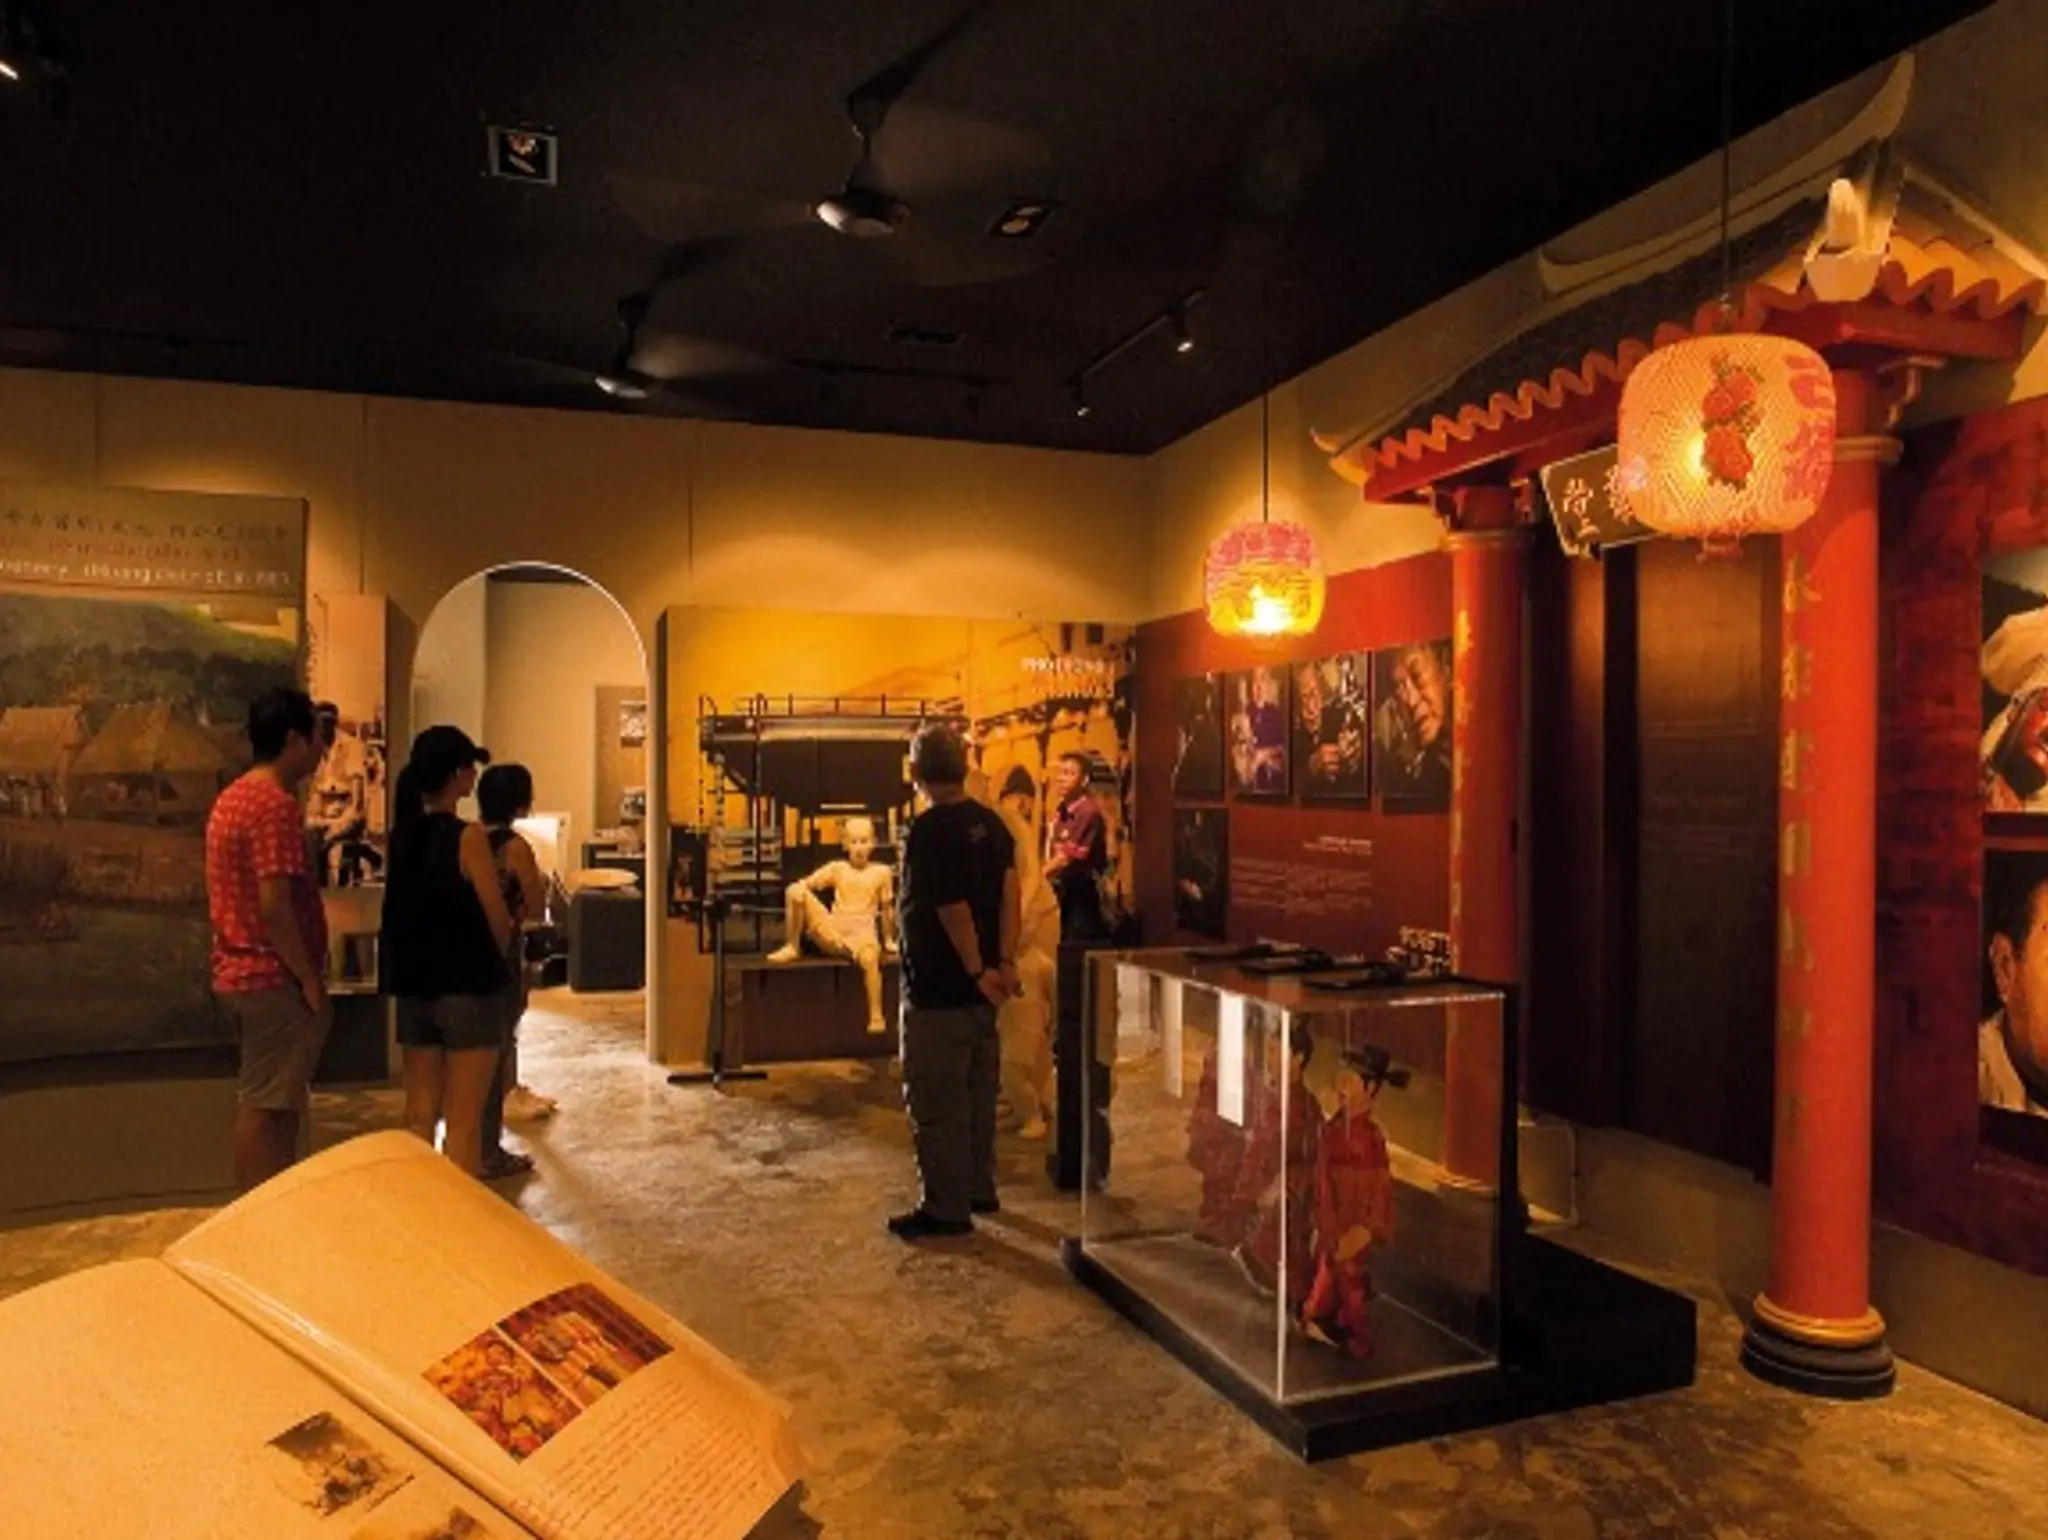 412 hidden (in) museum “ค้างคาวแดง”  แฝงความรู้ คู่โรงเรียนจีน